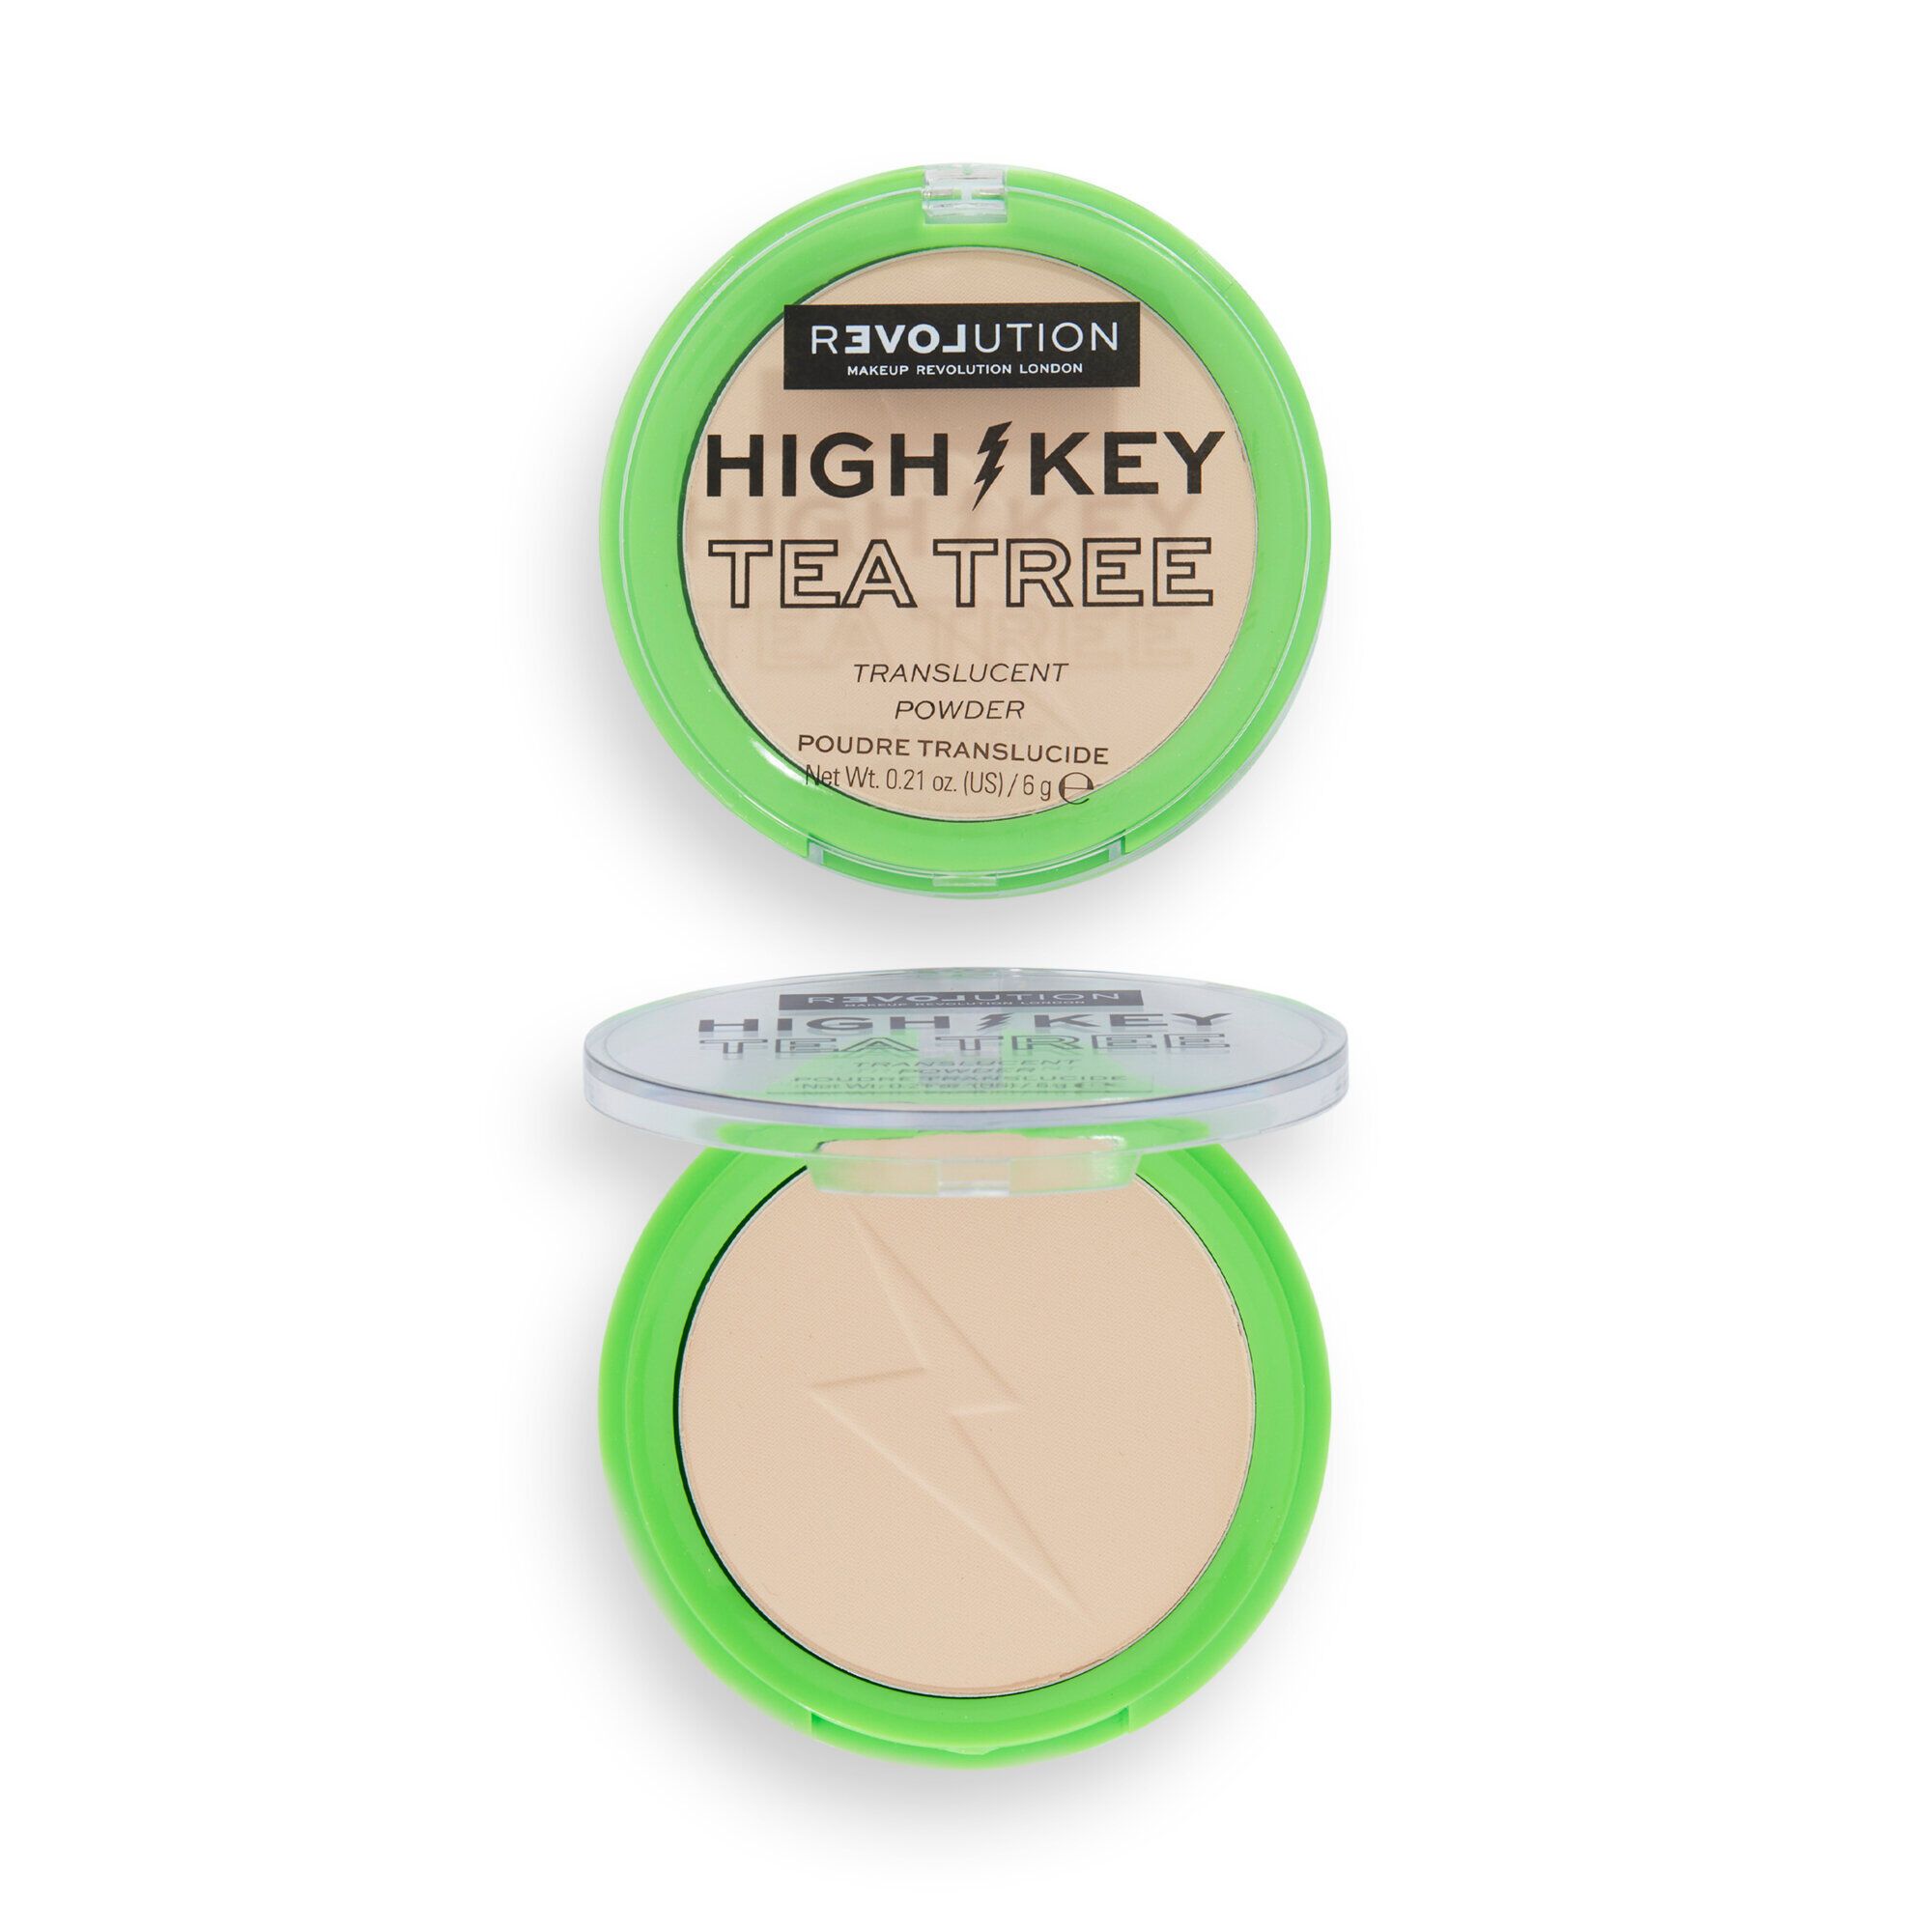 Puder - High Key Tea Tree Translucent Powder